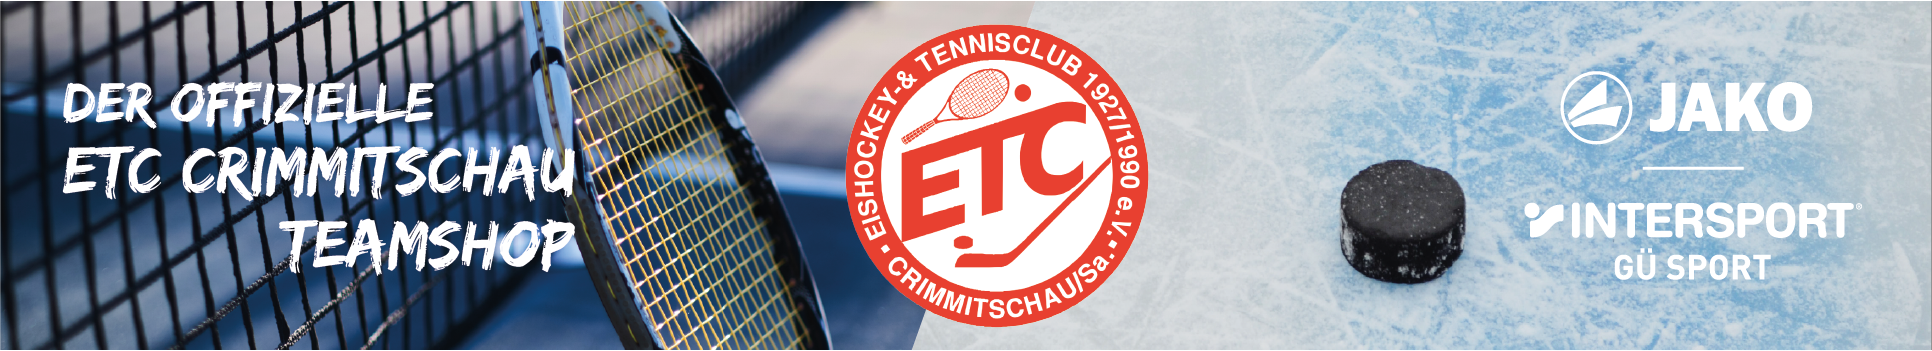 ETC Crimmitschau Title Image